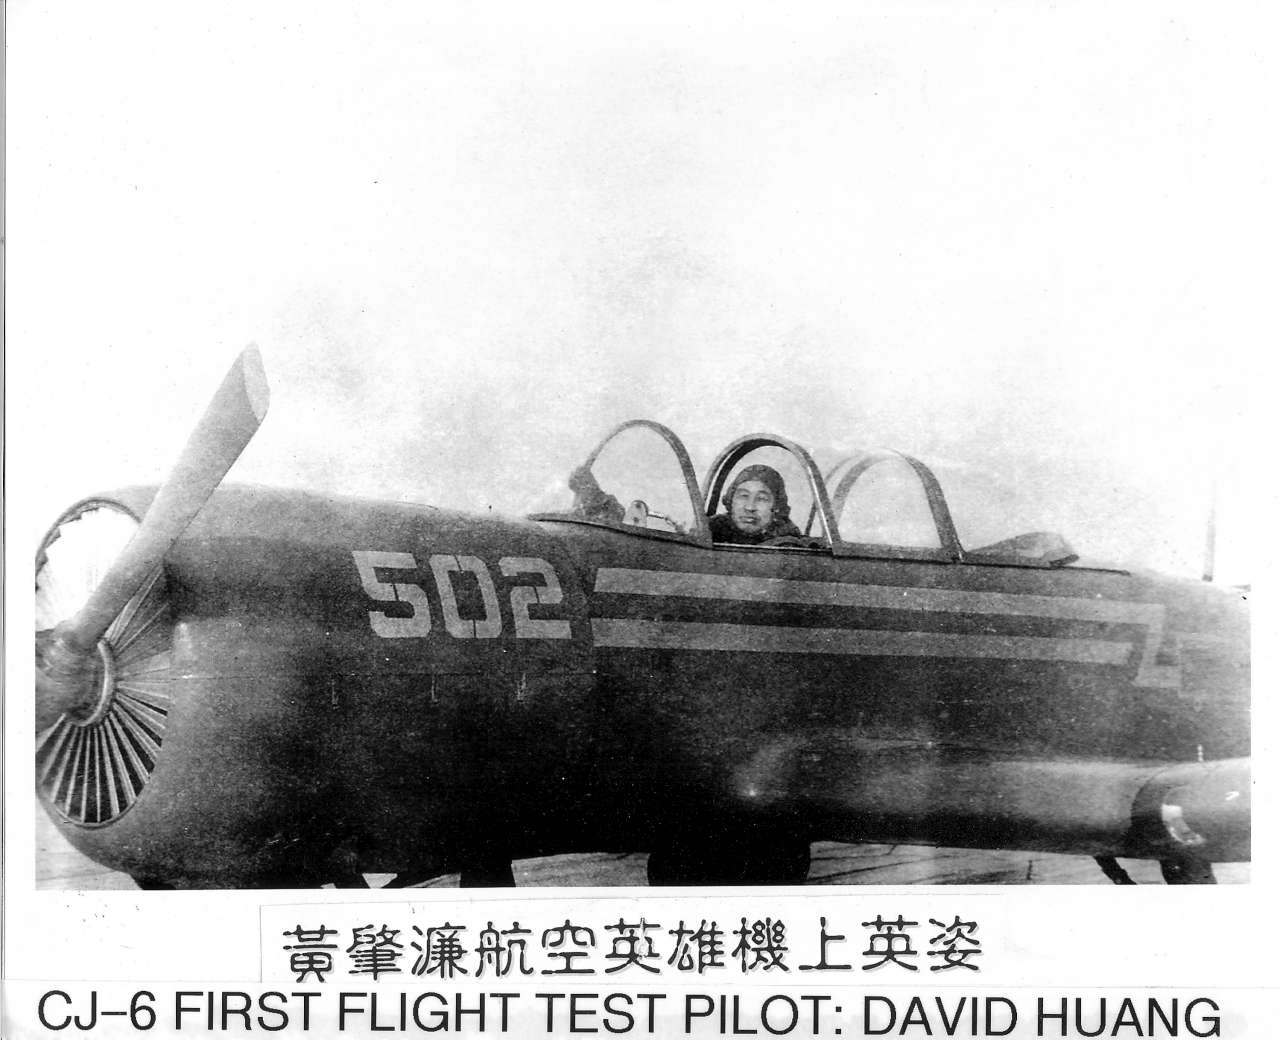 CJ-6 First Flight Test Pilot David Huang (黃肇濂) for China Nanchang CJ-6